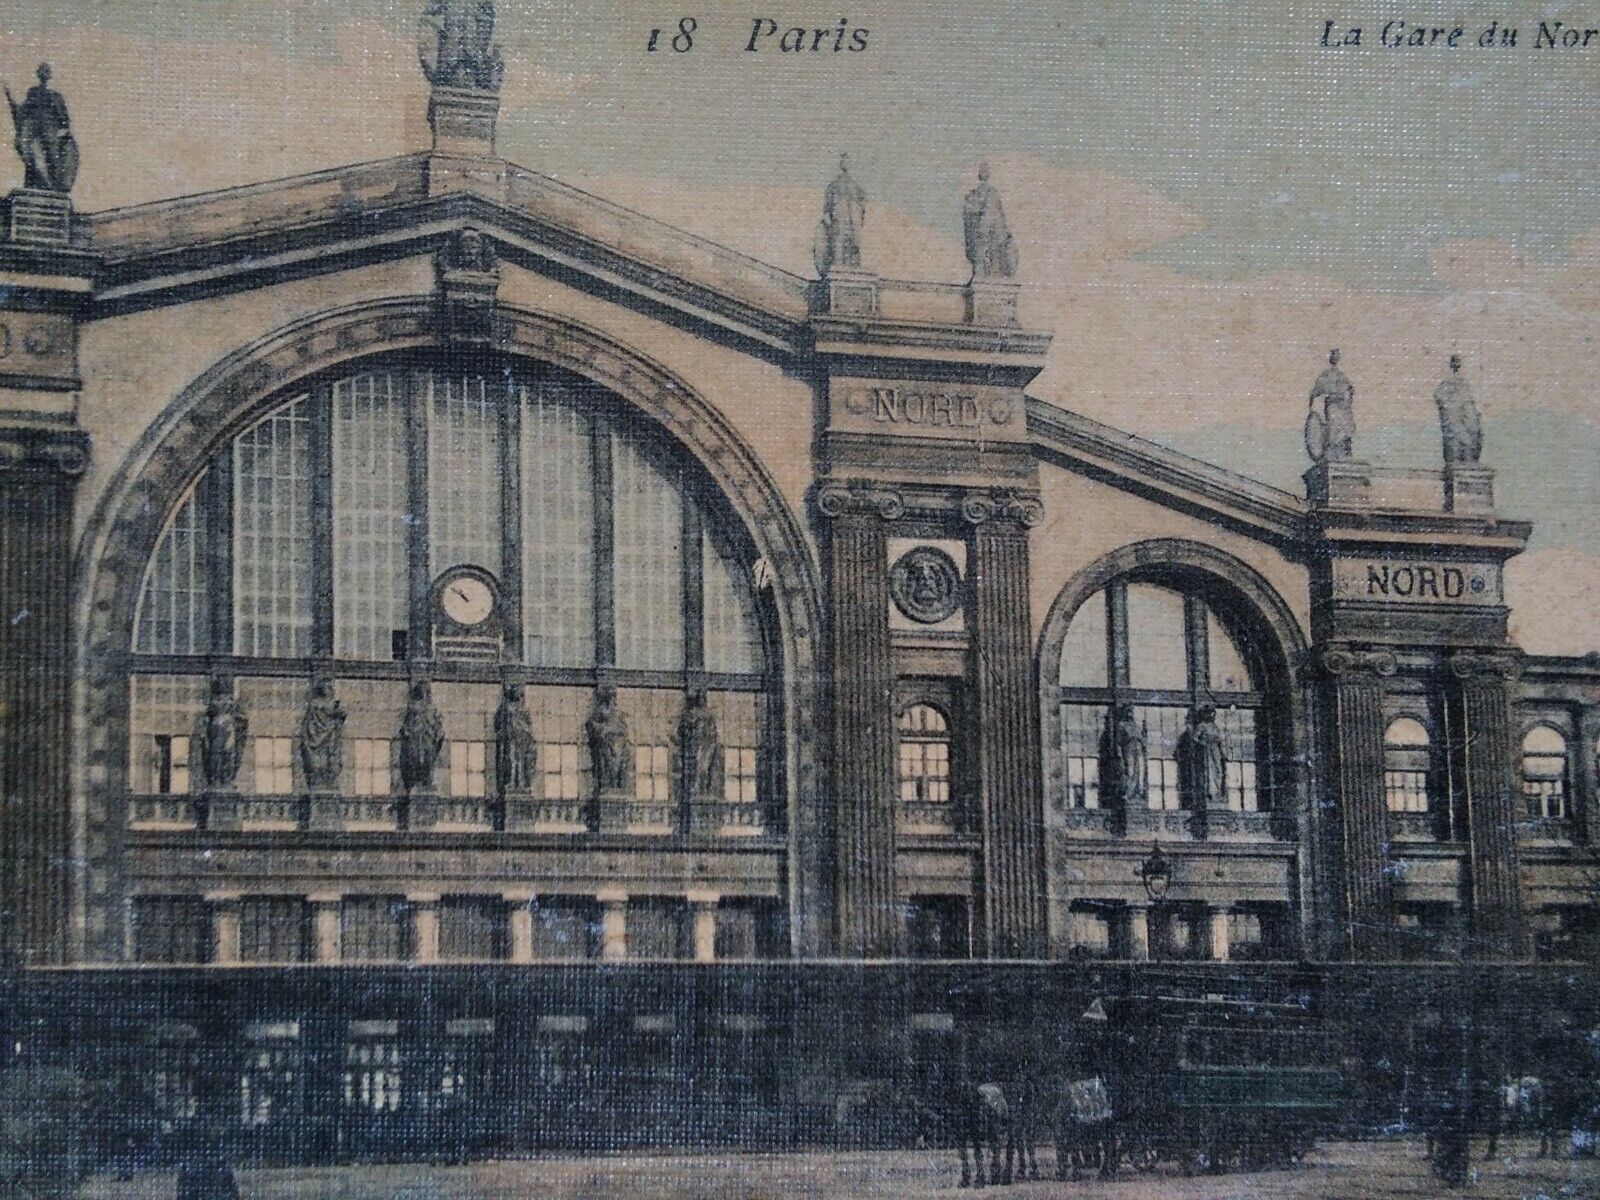 France Antique Postcard Early 1900s Rare Paris Gate du Nord Train Station Horse 